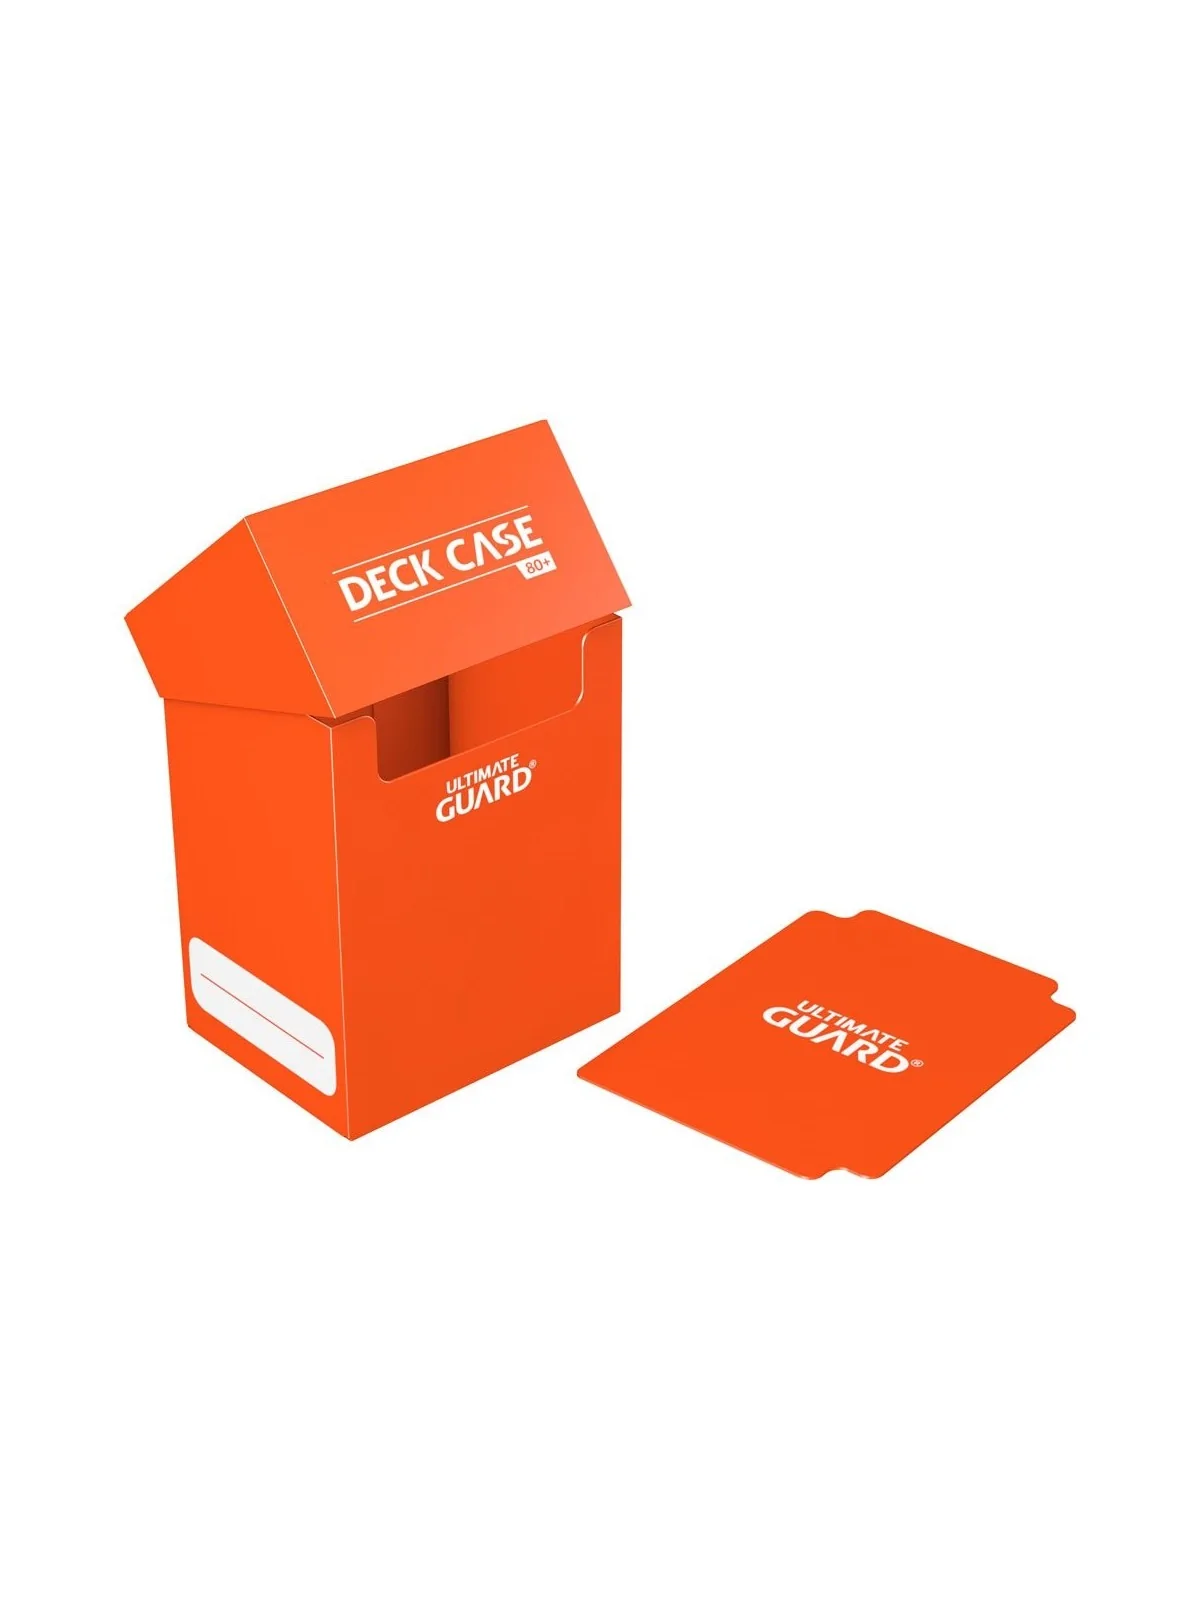 Comprar Ultimate Guard Deck Case Tamaño Estandar 80+ Naranja barato al